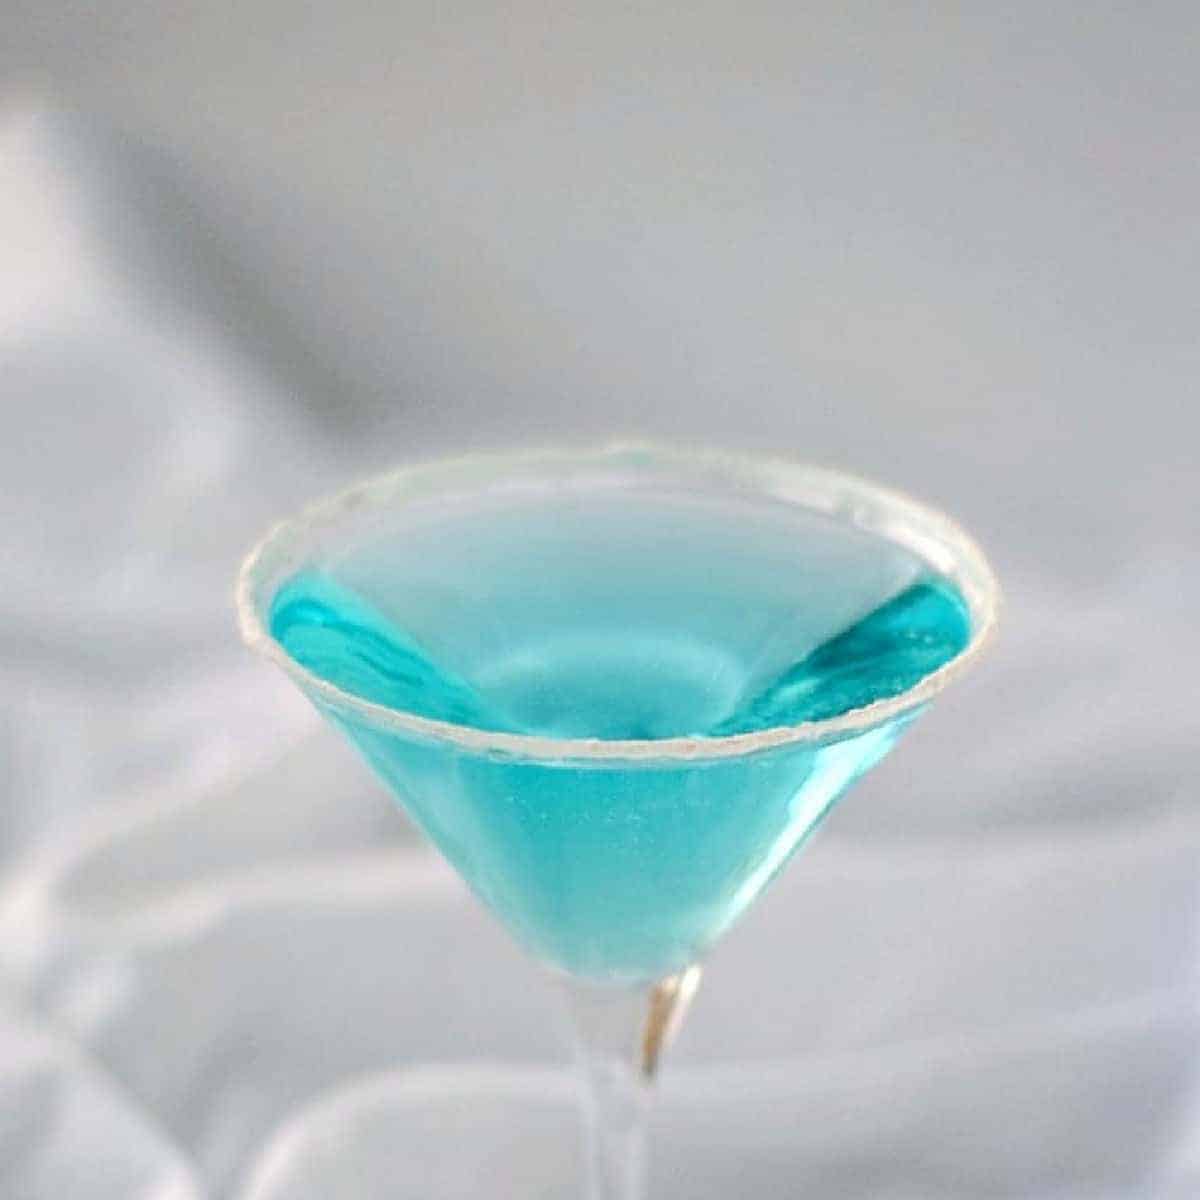 FROZEN Inspired Cocktail